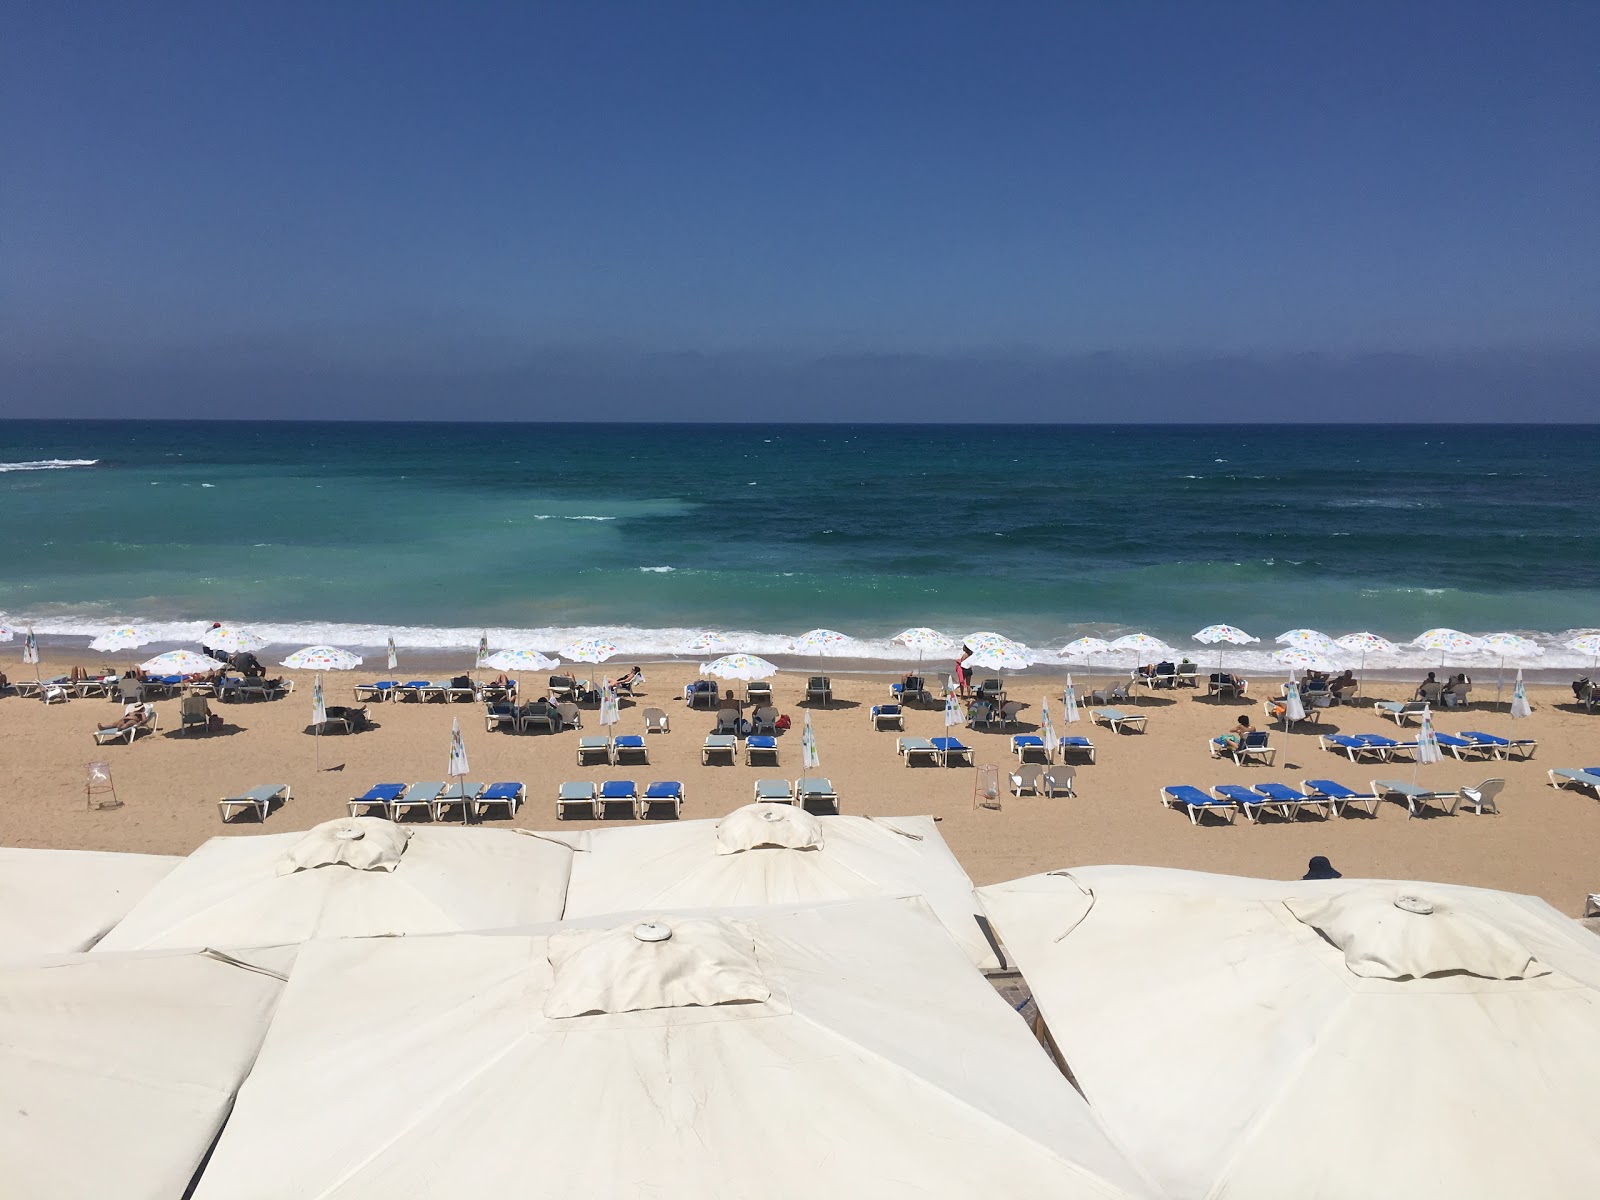 Fotografie cu Givat Aliya beach - locul popular printre cunoscătorii de relaxare